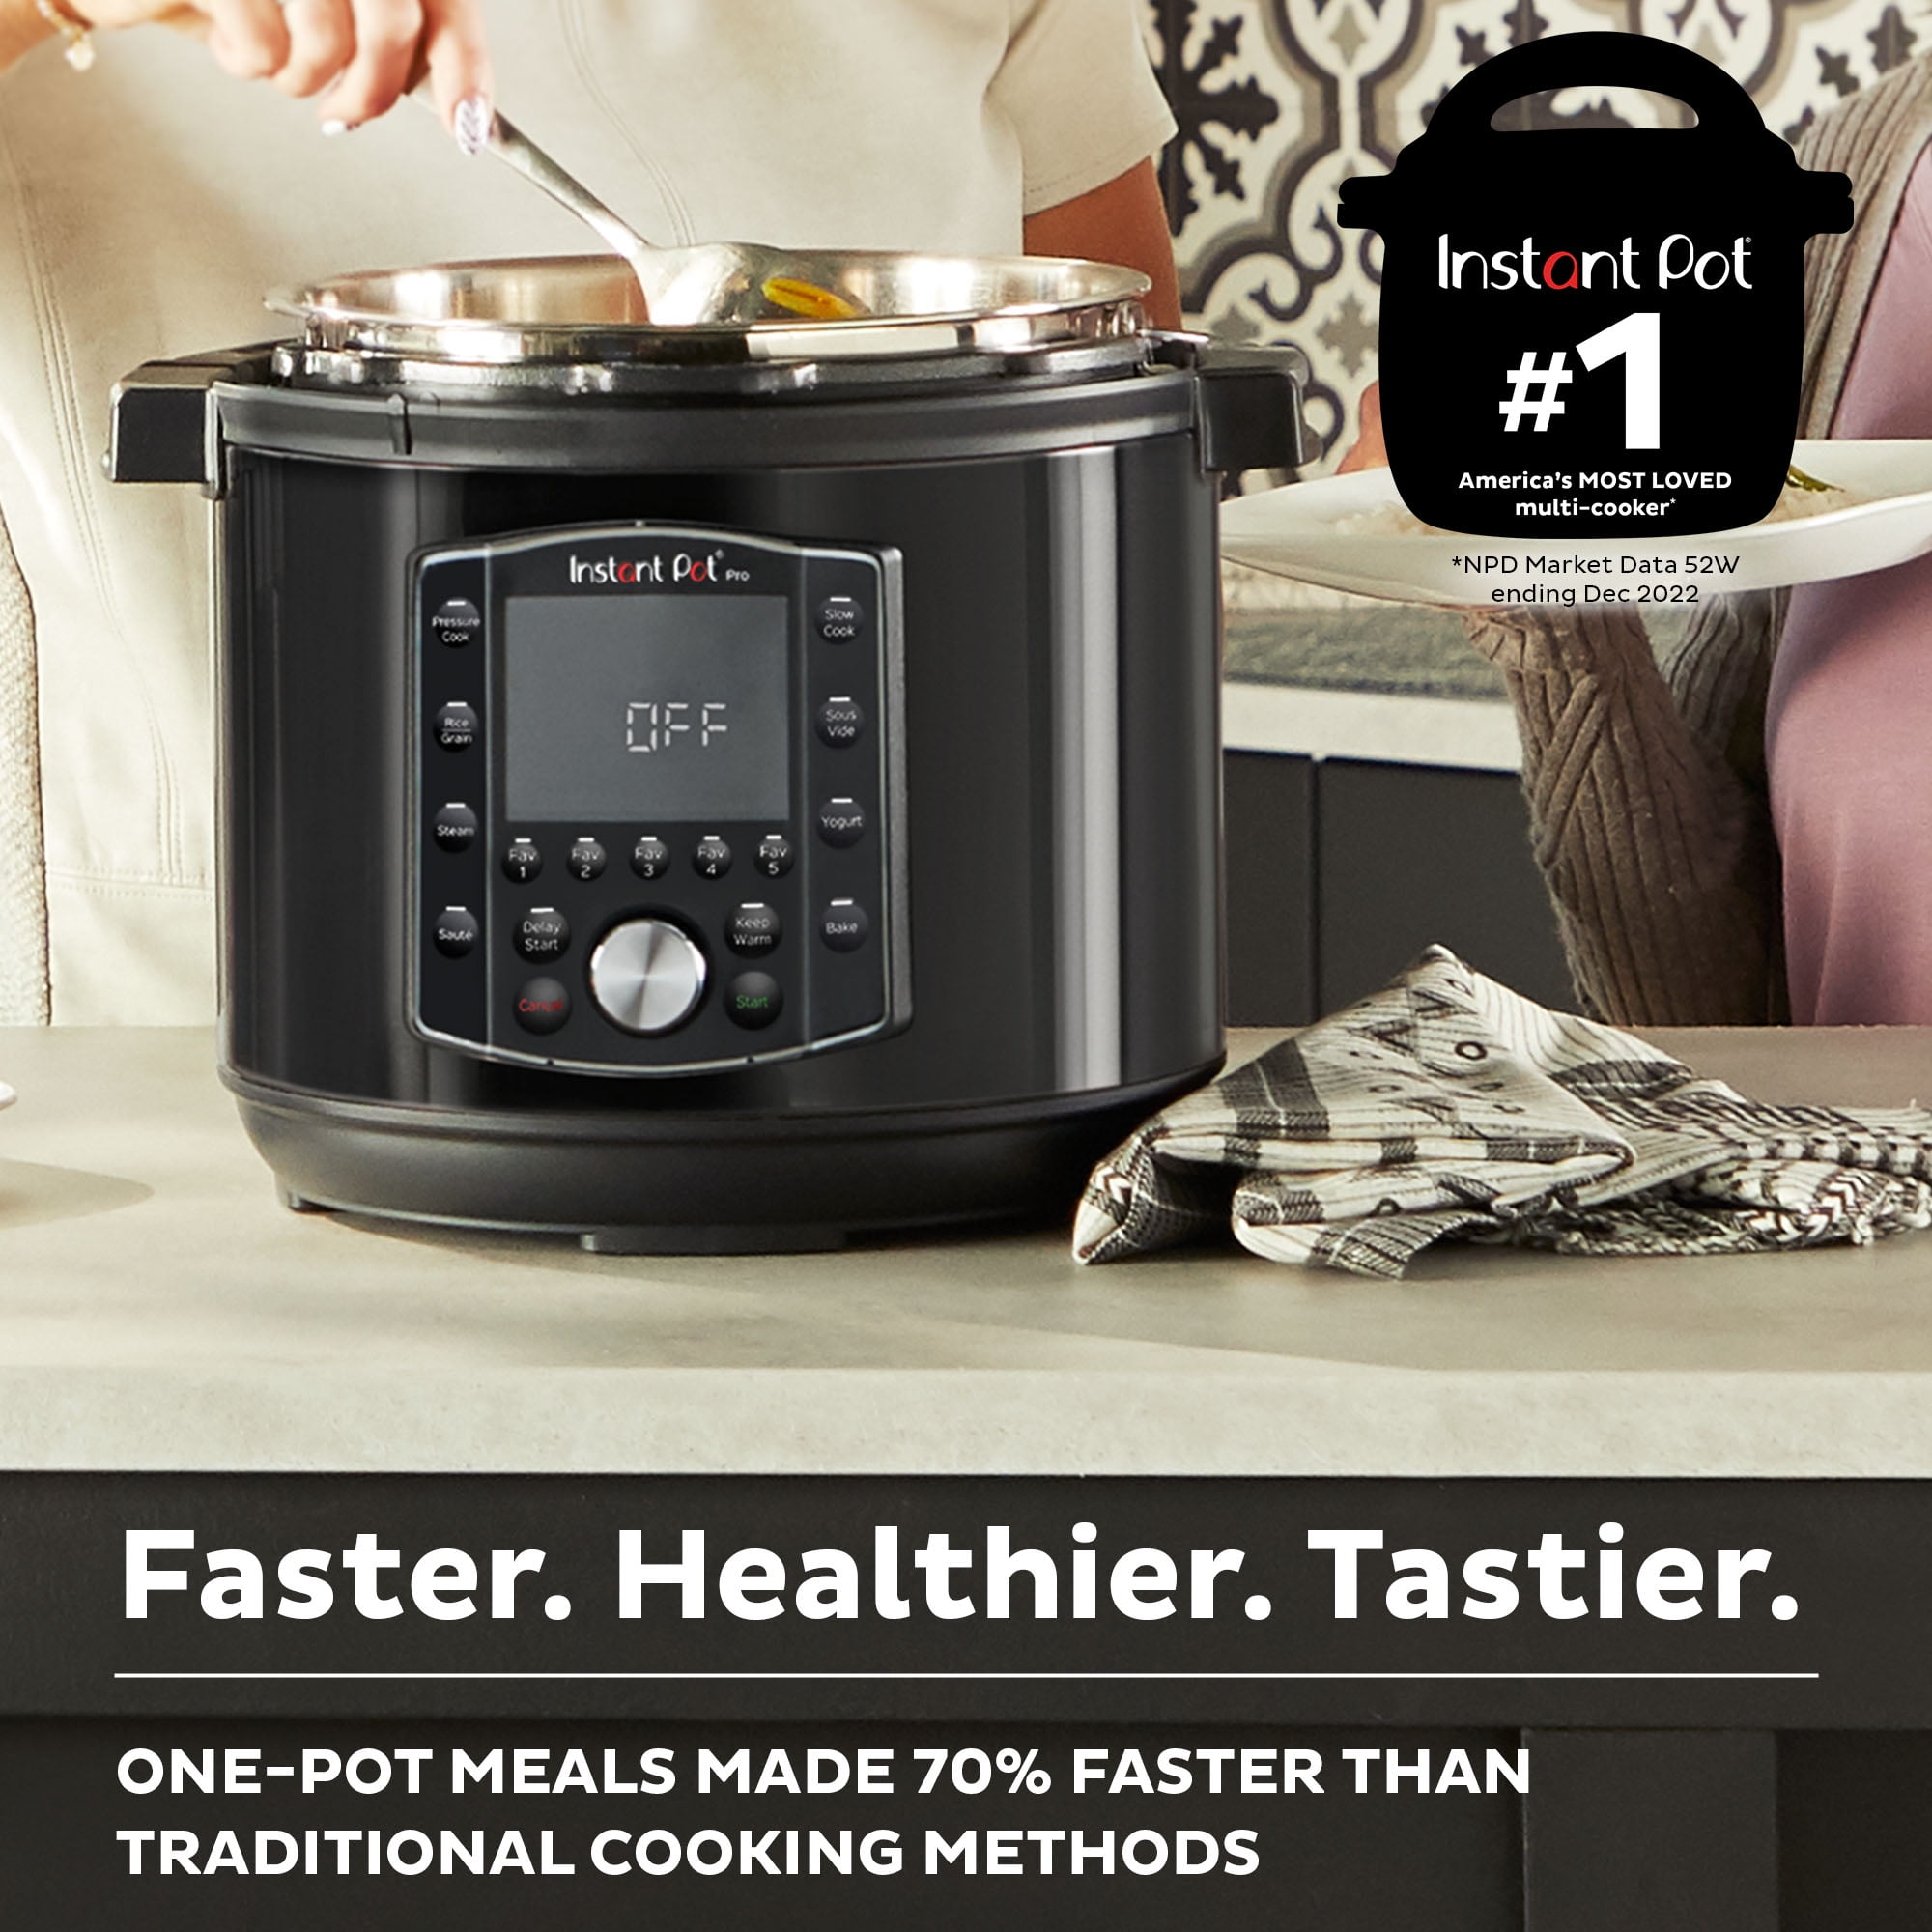  Instant Pot Pro Plus Wi-Fi Smart 10-in-1, Pressure Cooker, Slow  Cooker, Rice Cooker, Steamer, Sauté Pan, Yogurt Maker, Warmer, Canning Pot,  Sous Vide, Includes App with Over 800 Recipes, 6 Quart